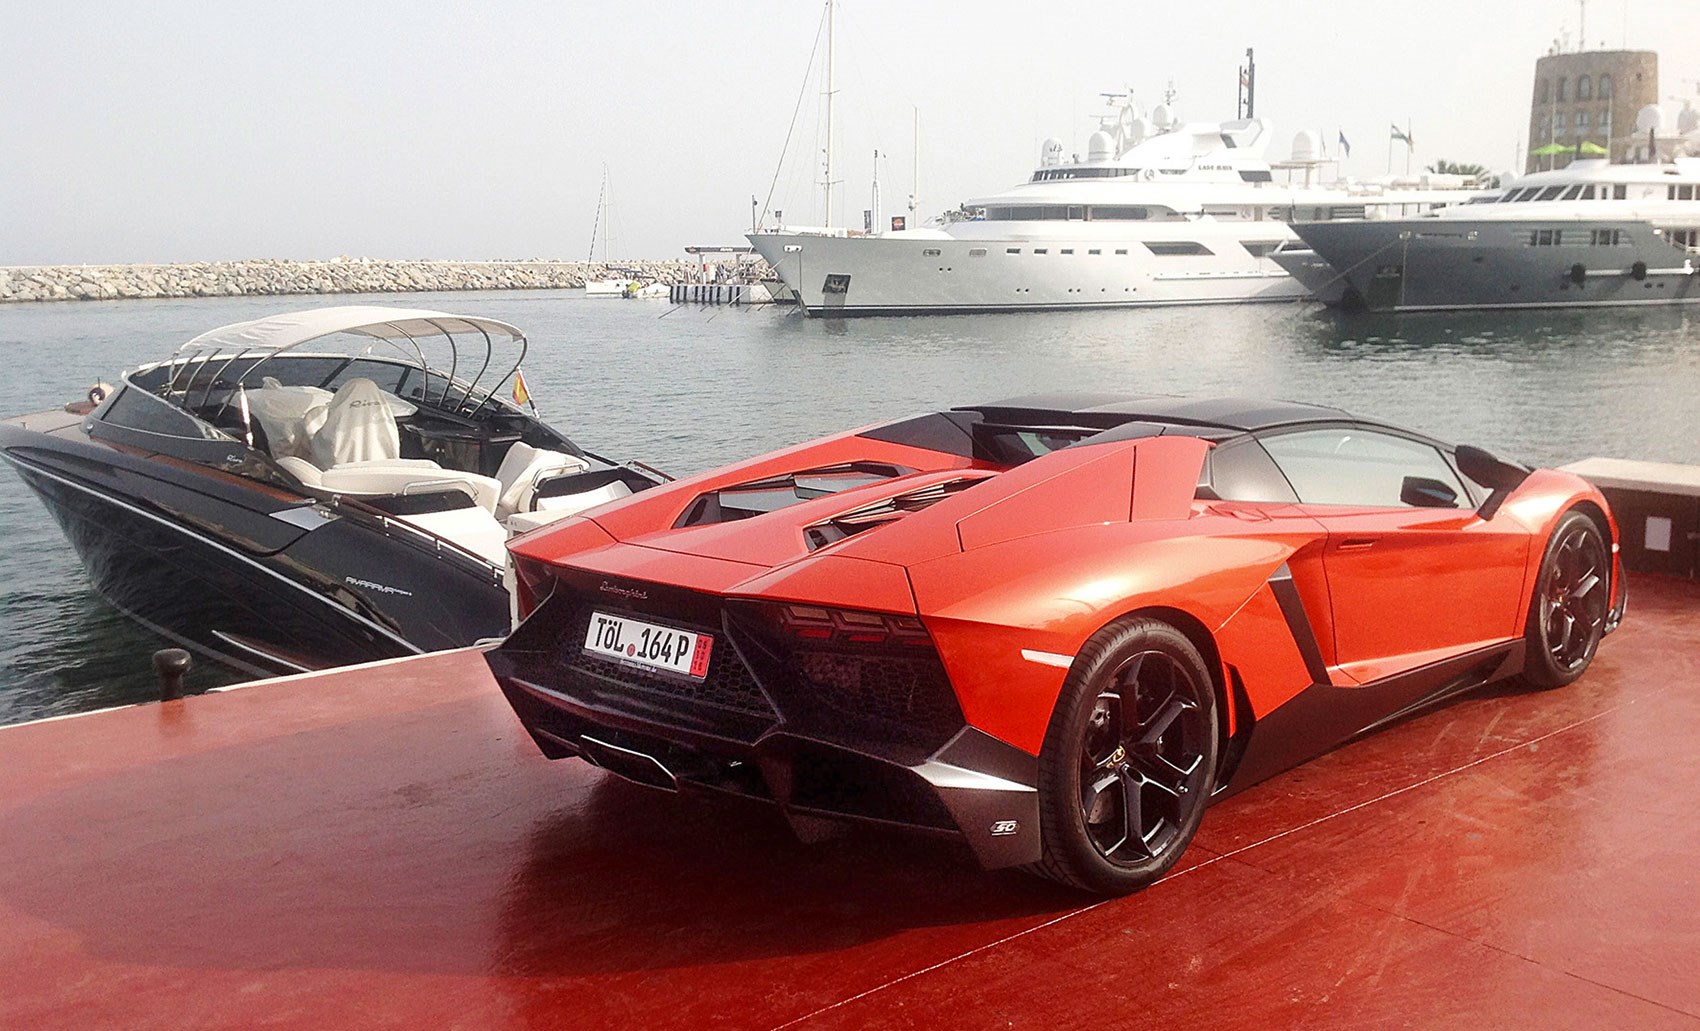 Lamborghini Aventador spotted in Puerto Banus, Spain on 08/08/2015